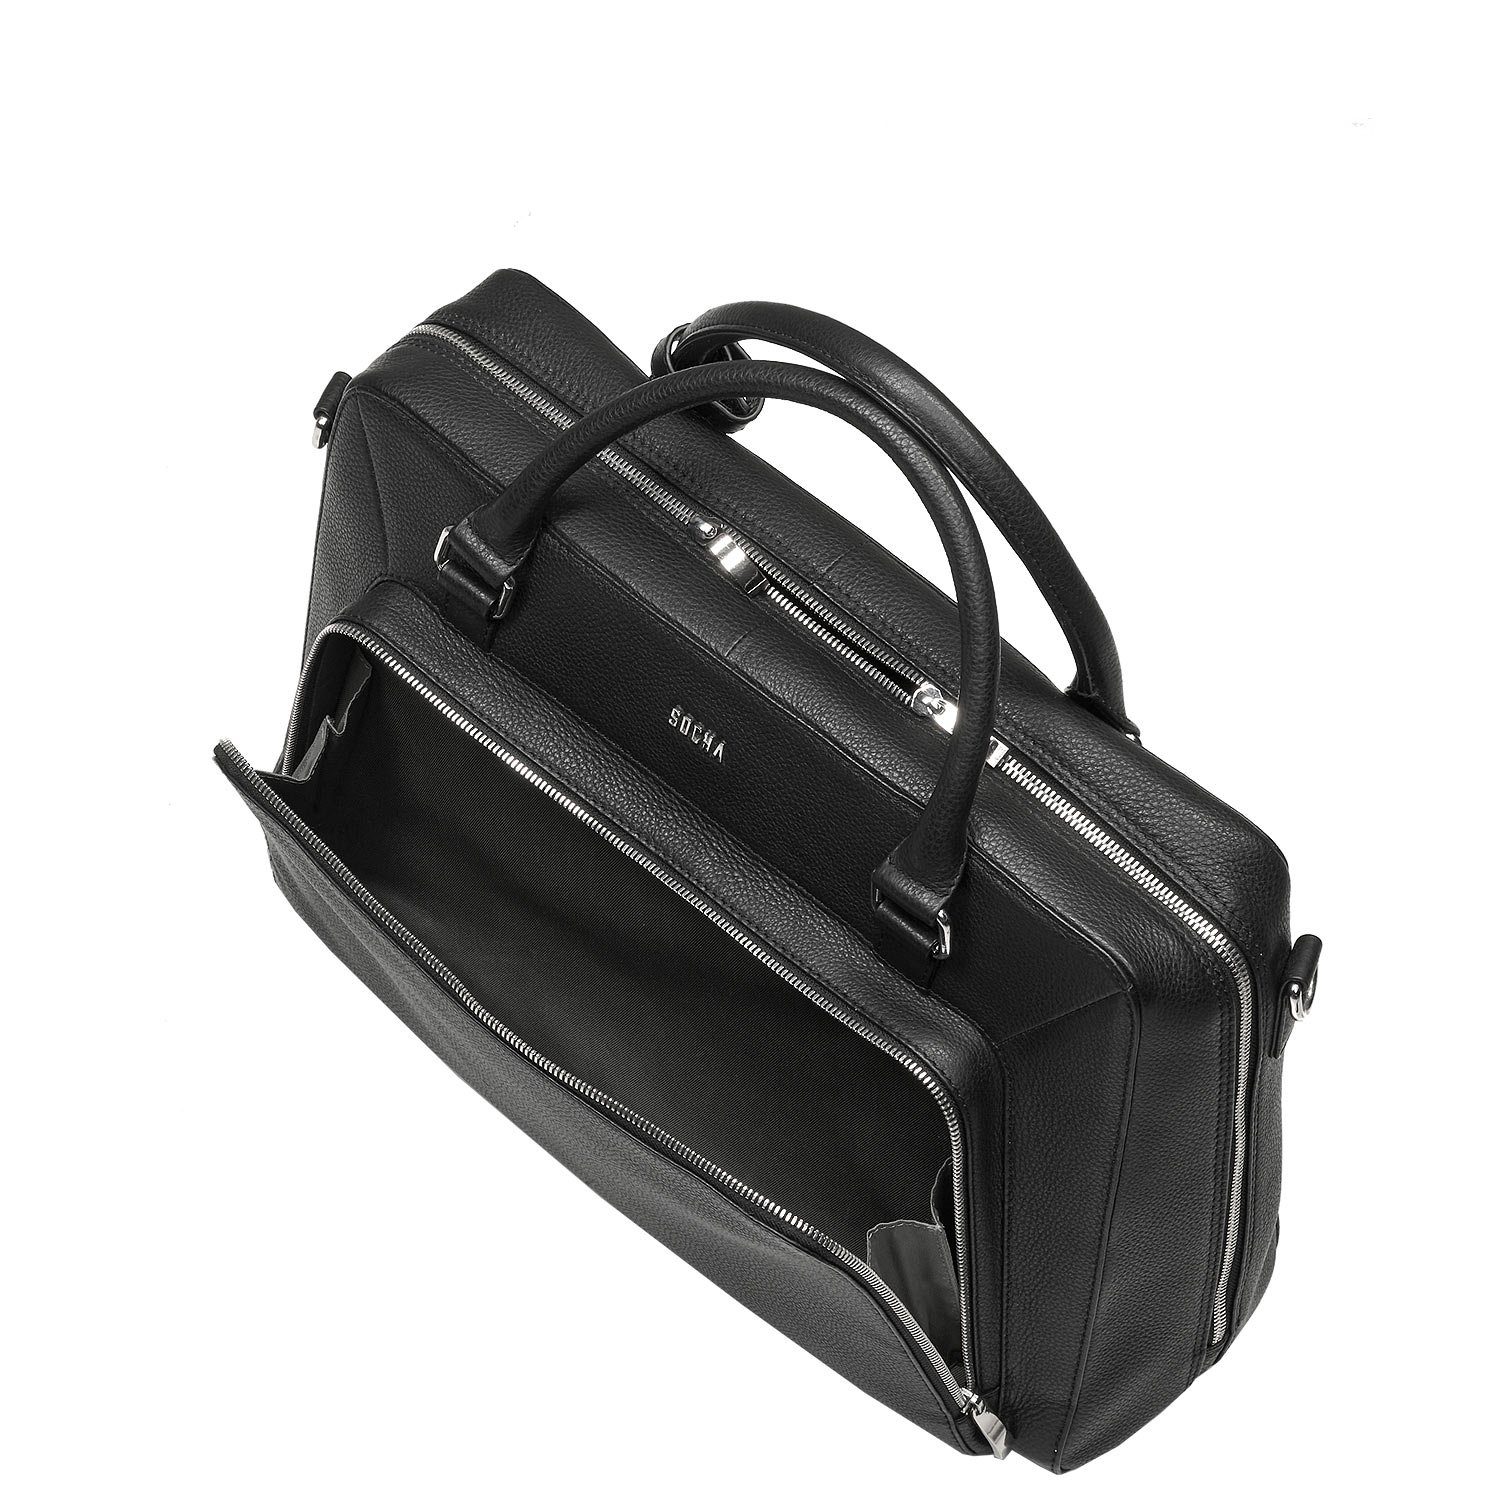 SOCHA Laptoptasche Leder - - - Leder herausnehmbares Vollausstattung Laptopfach black, Schultergurt Businesstasche/Laptoptasche/Aktentasche Zoll - Unisex 15 Diamond